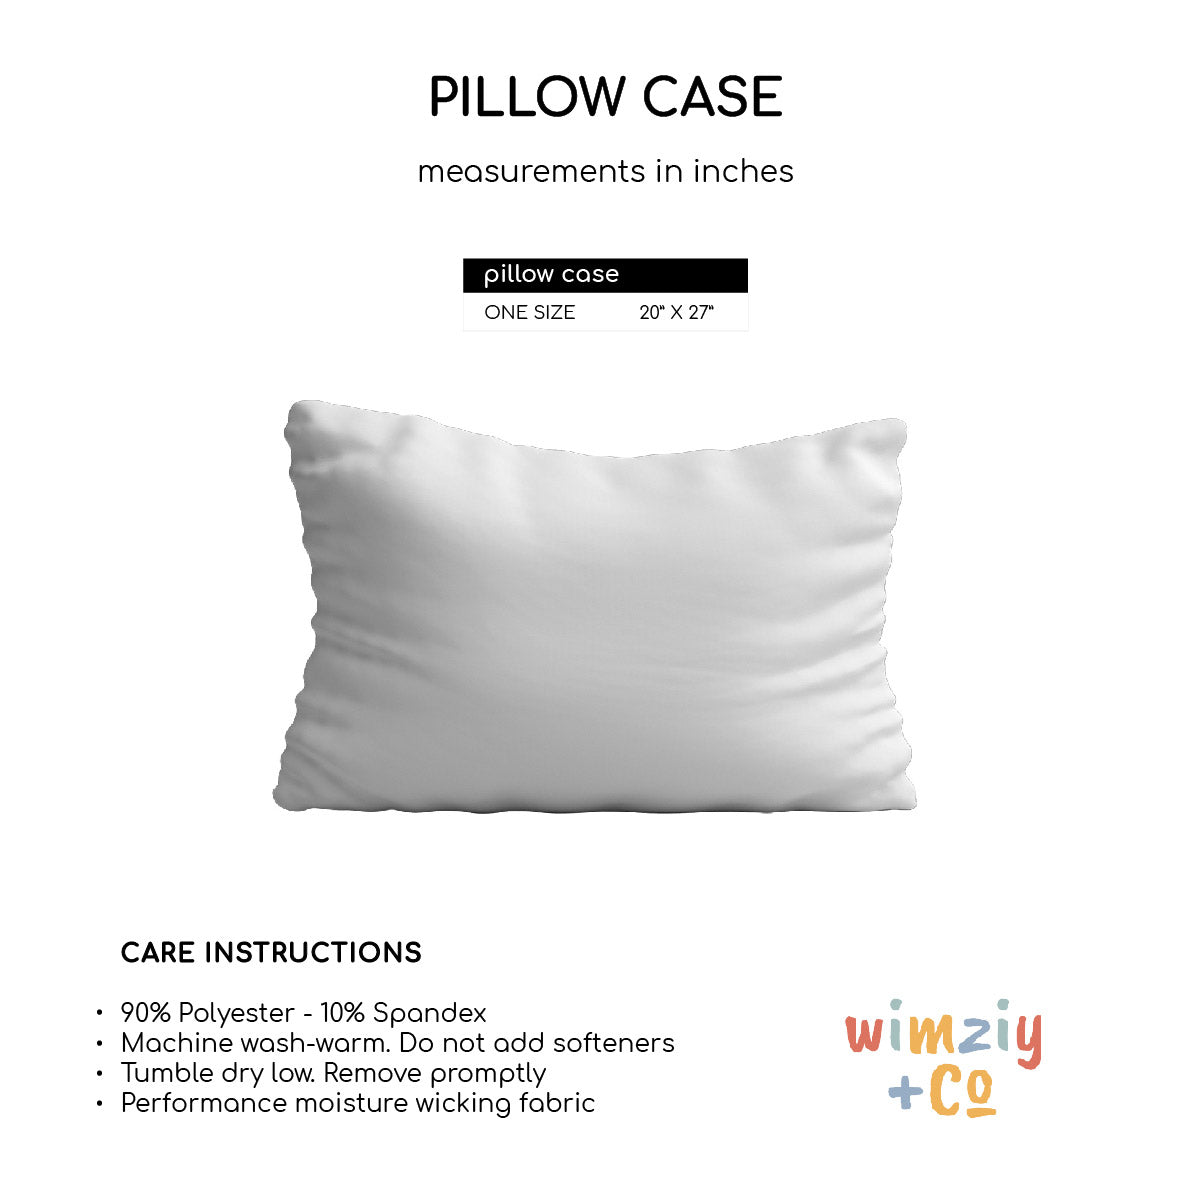 Monogram white polka dots pillow case - Wimziy&Co.